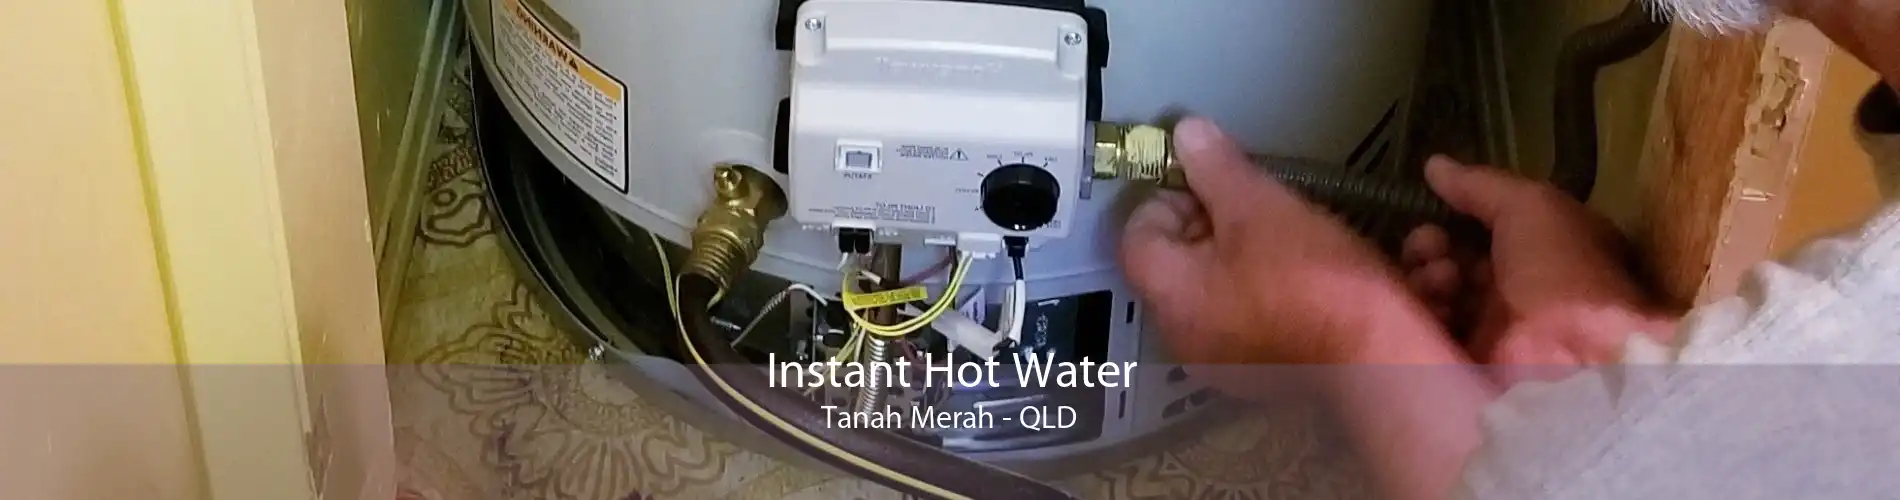 Instant Hot Water Tanah Merah - QLD